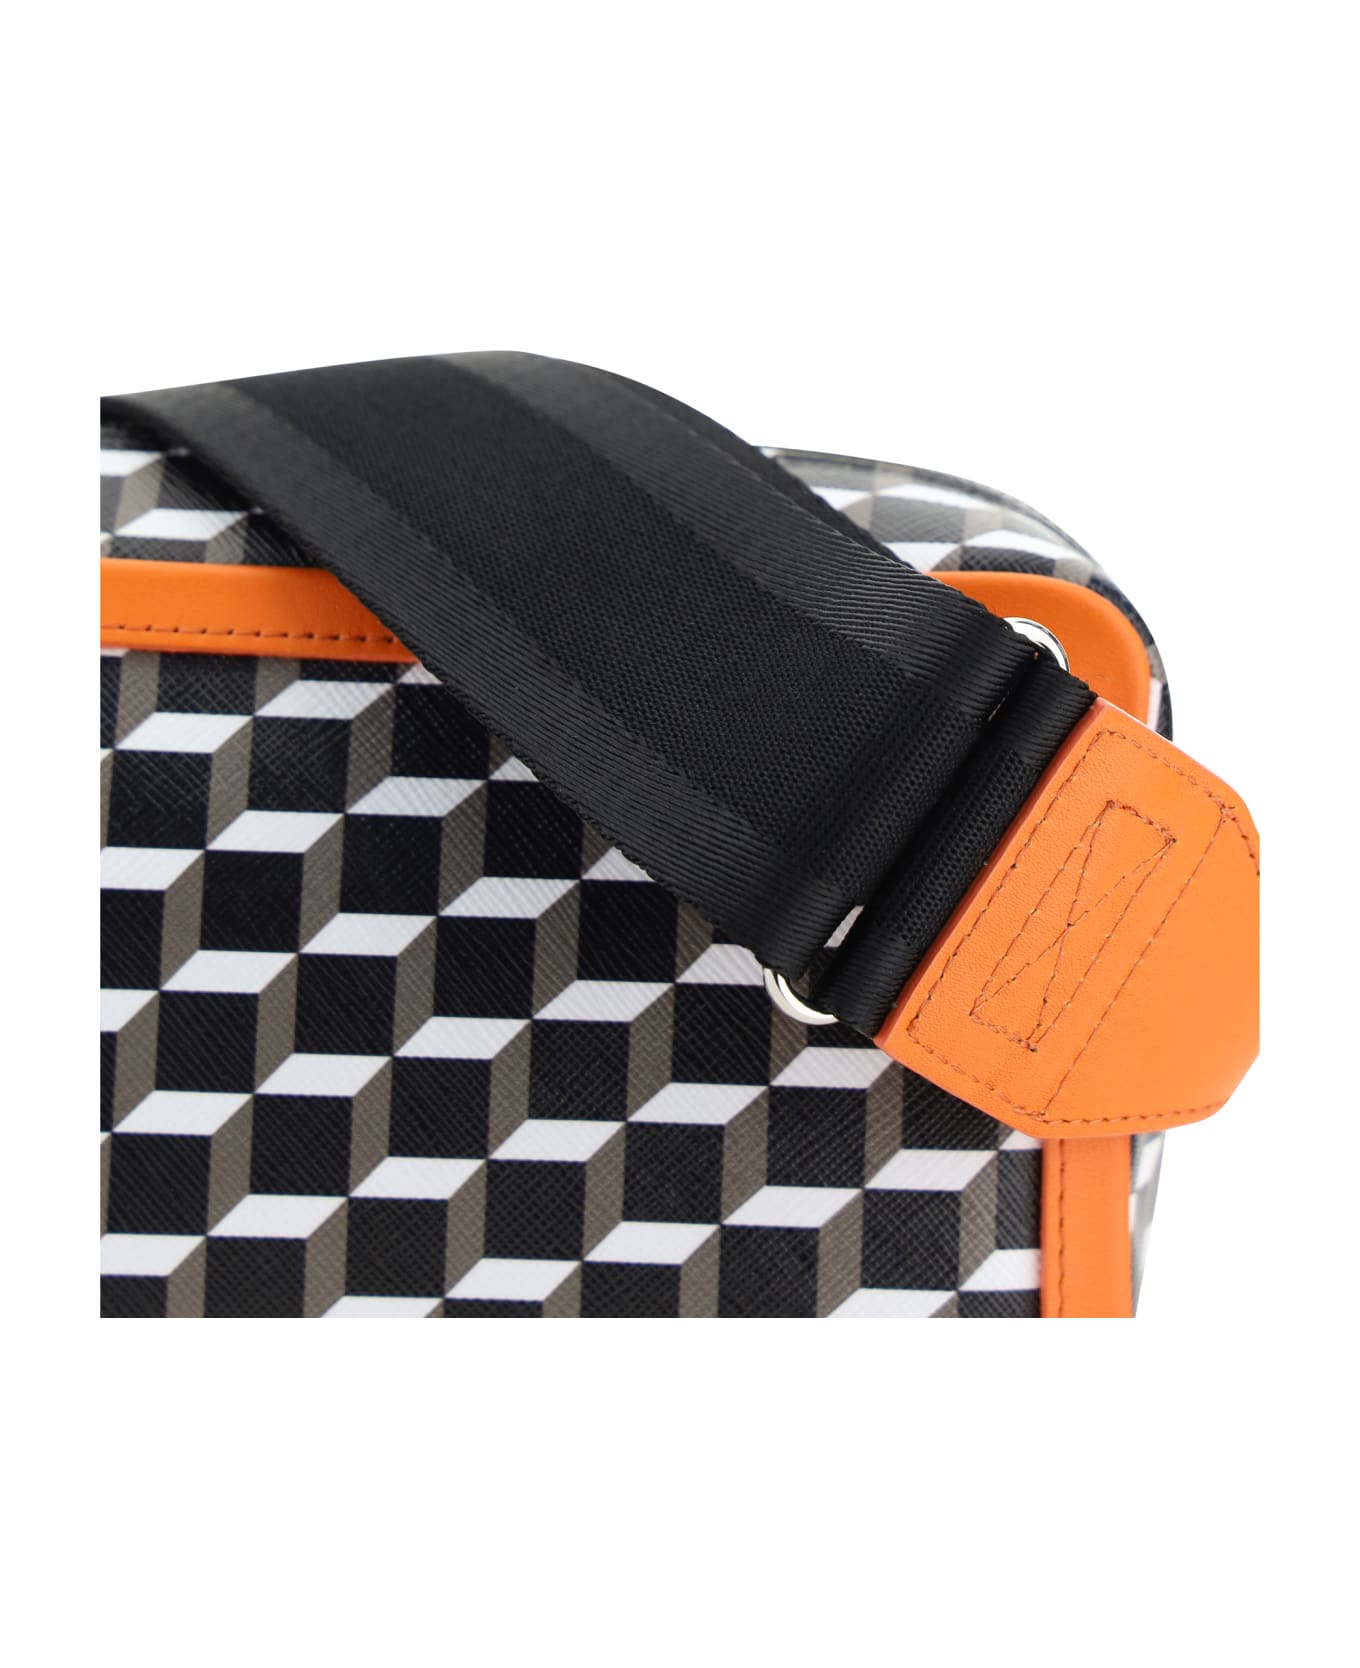 Pierre Hardy Cube Box Shoulder Bag - Black/white/orange